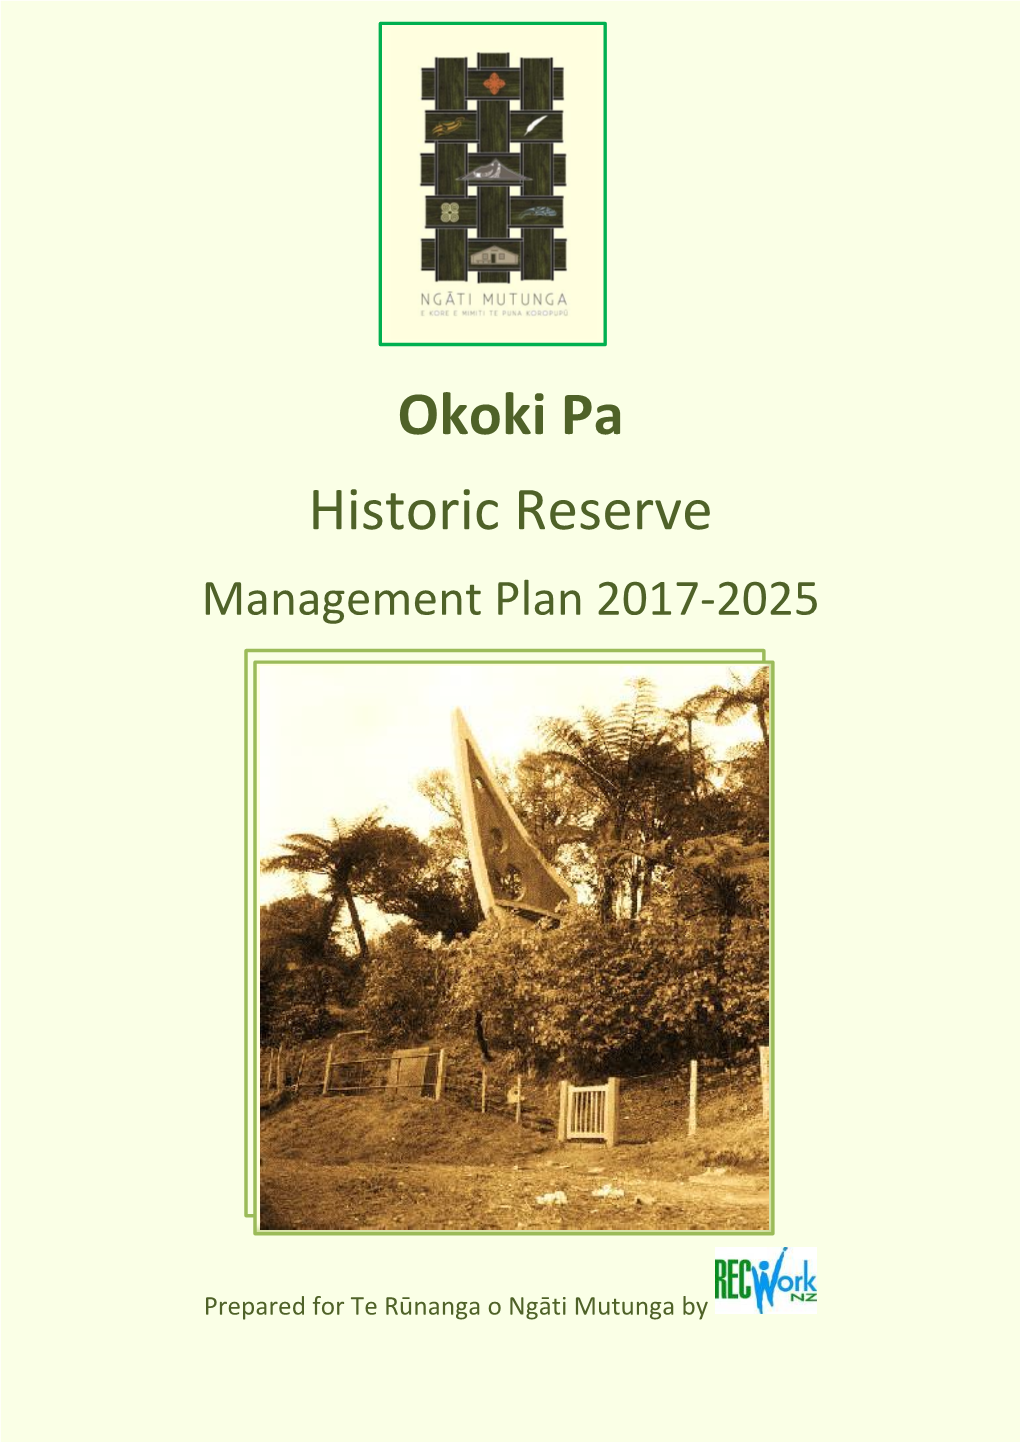 Okoki Pa Historic Reserve Management Plan 2017-2025